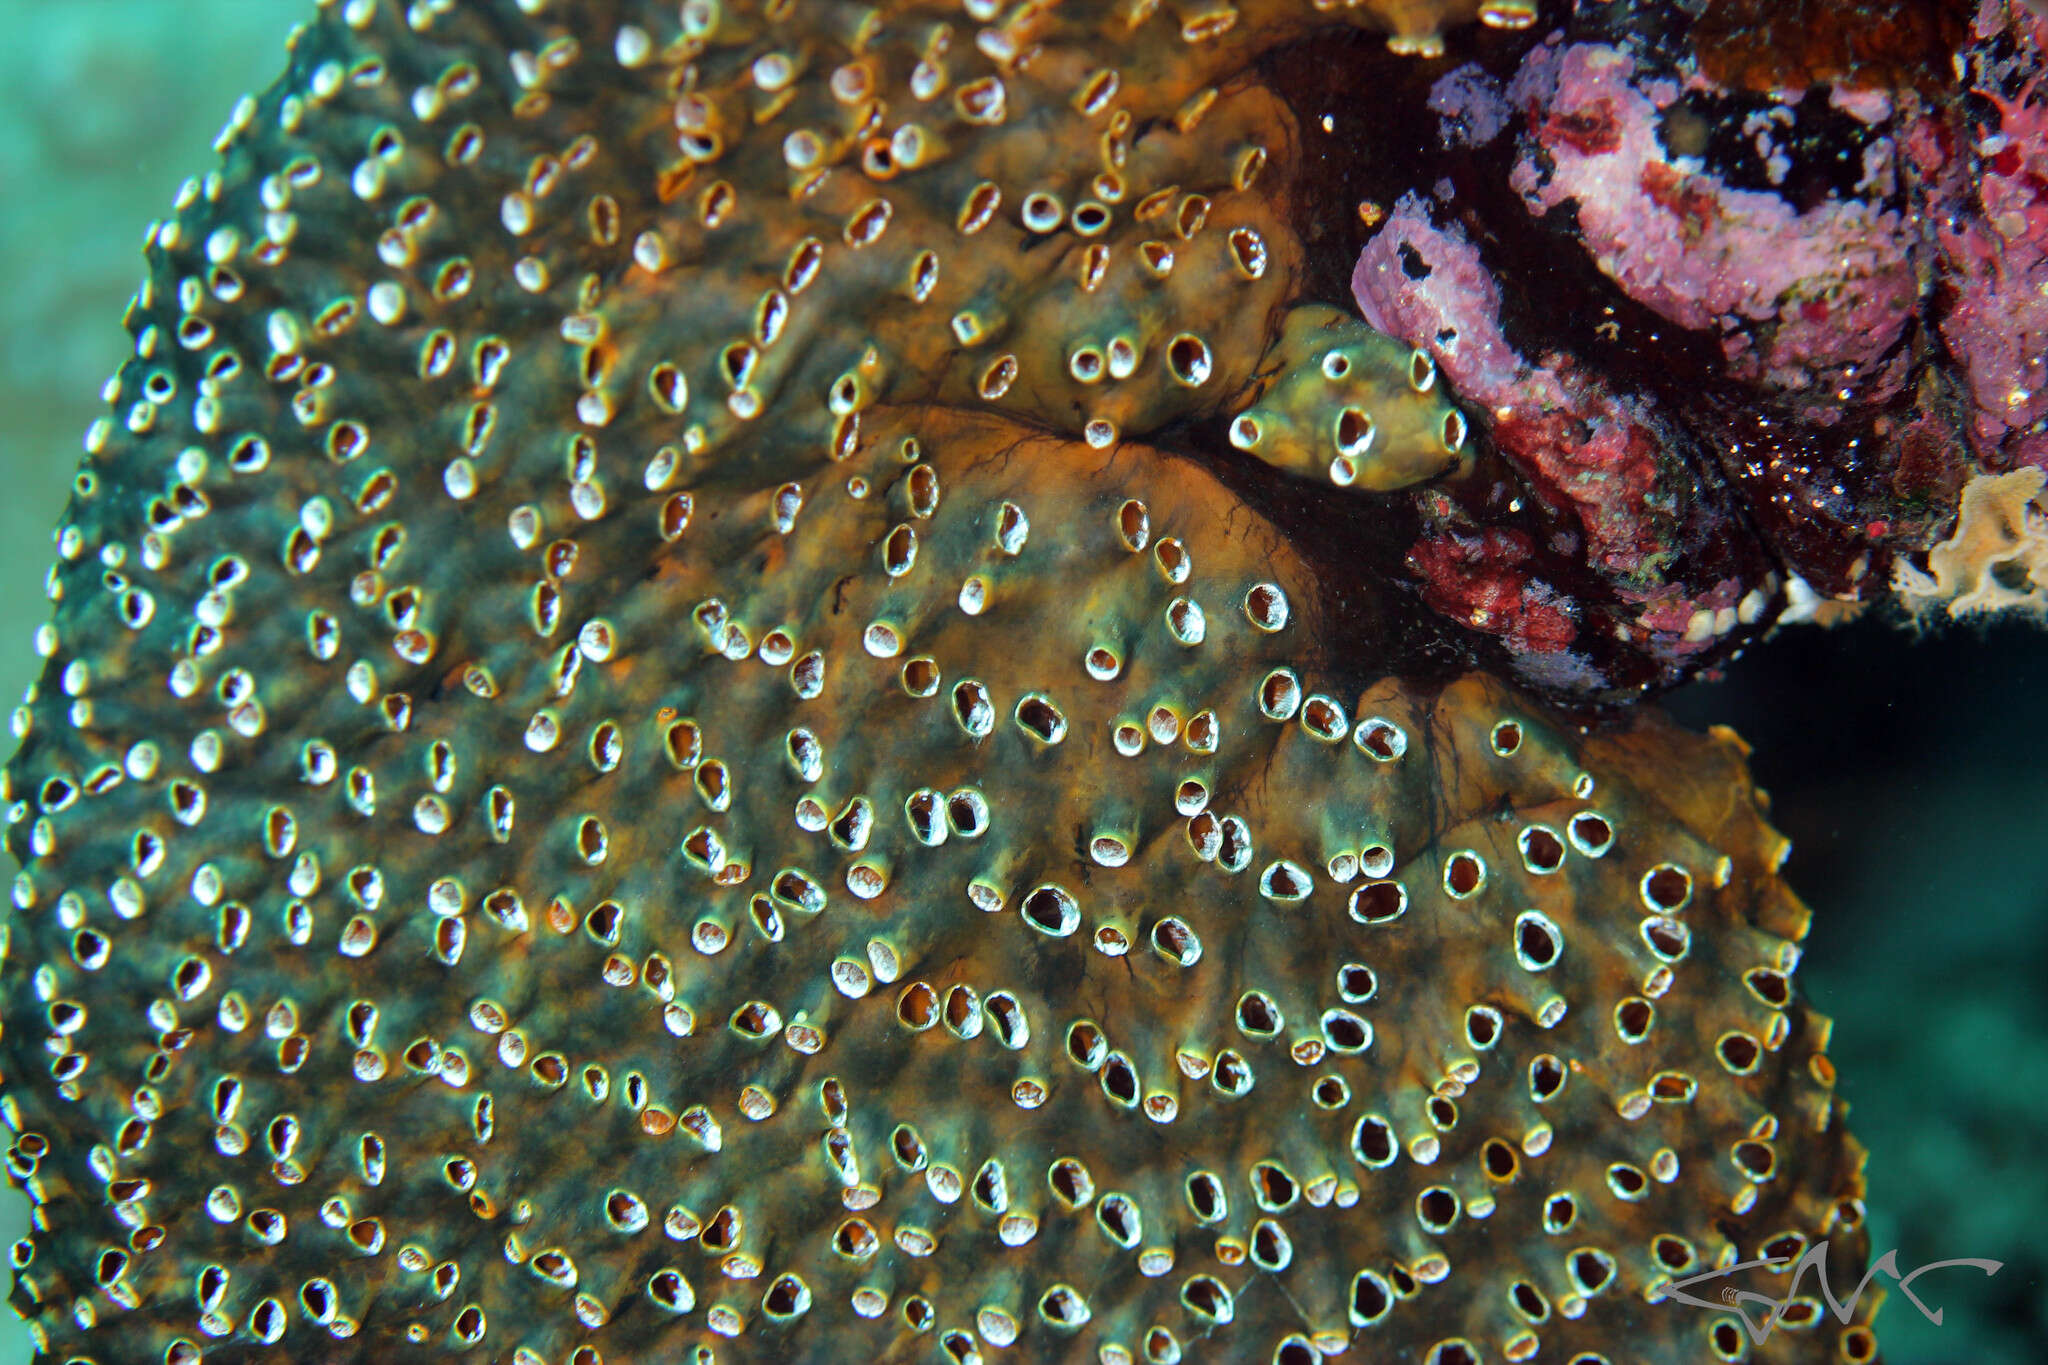 Image of Fijian stalked ascidian